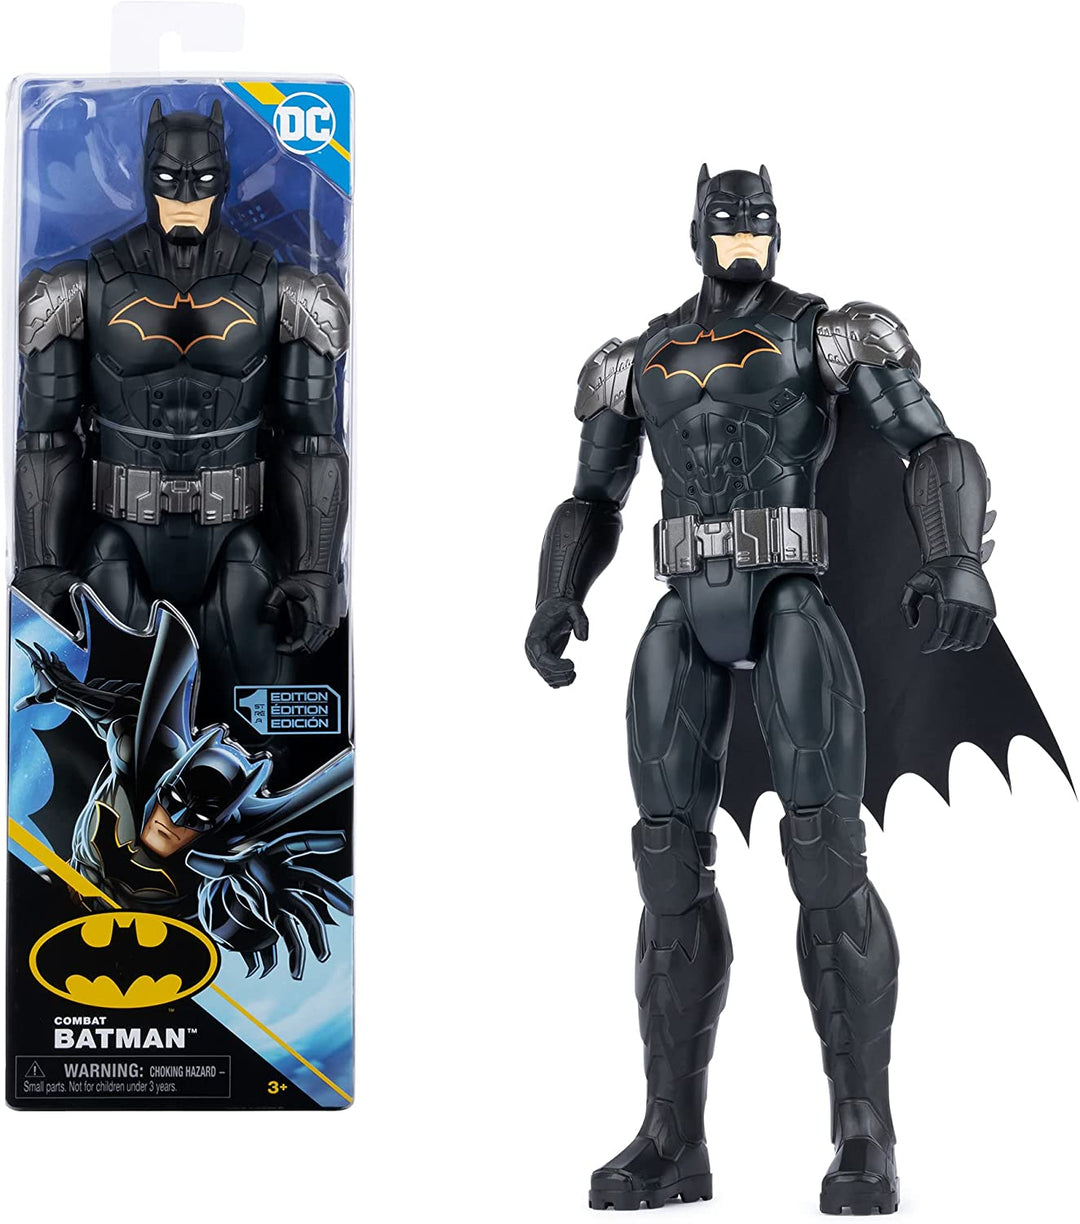 DC Comics, 12-inch Combat Batman Action Figure, Kids Toys for Boys and Girls